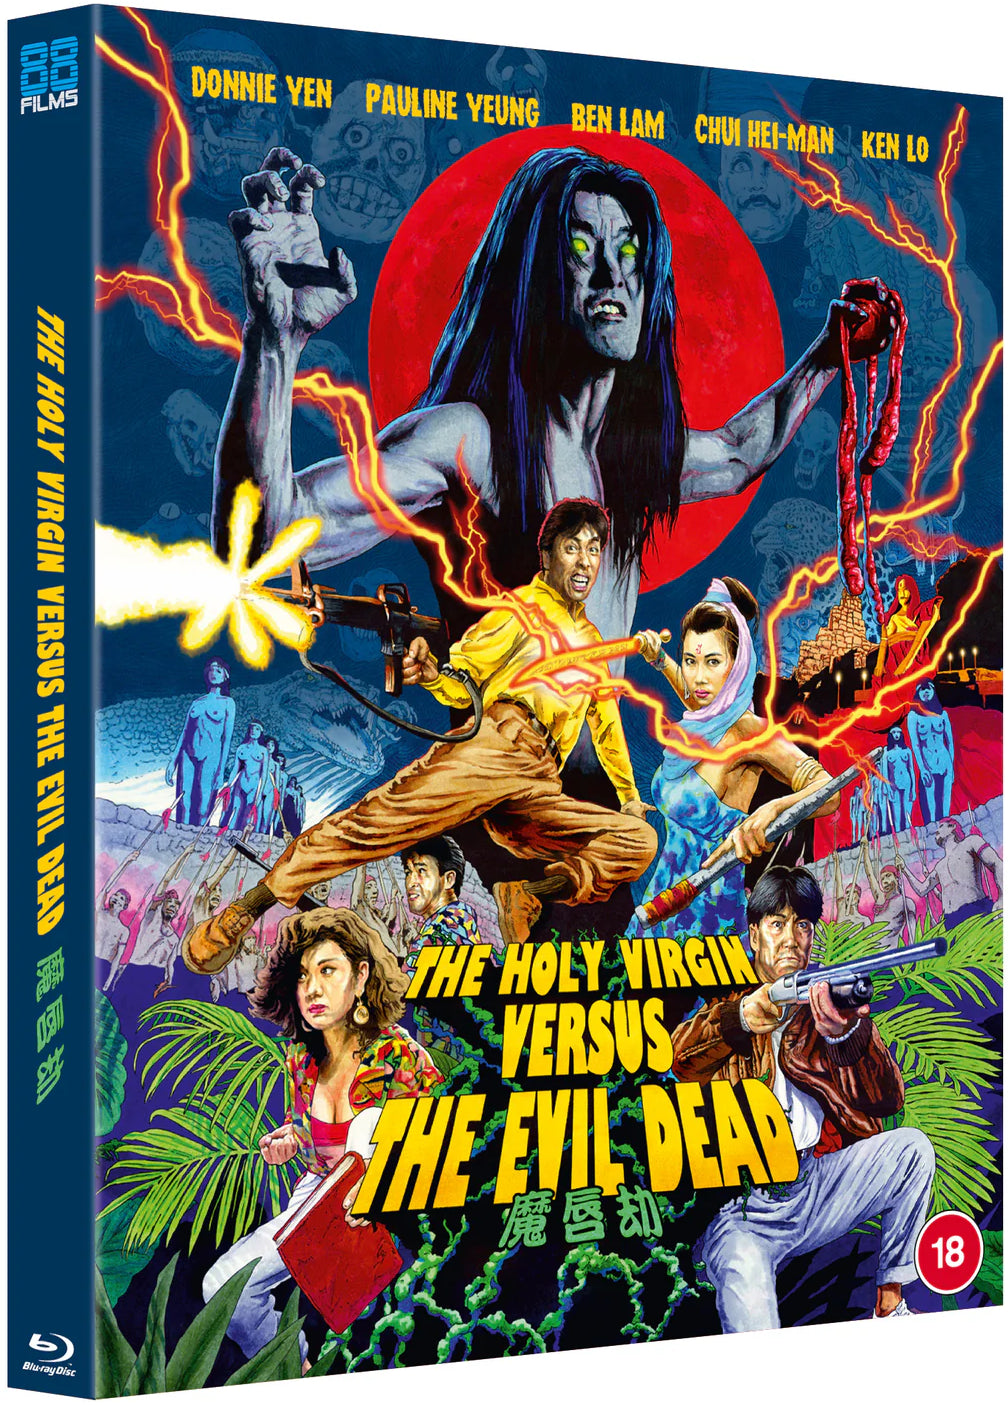 The Holy Virgin Versus The Evil Dead (1991) 88 Films UK - Blu-ray Region Free